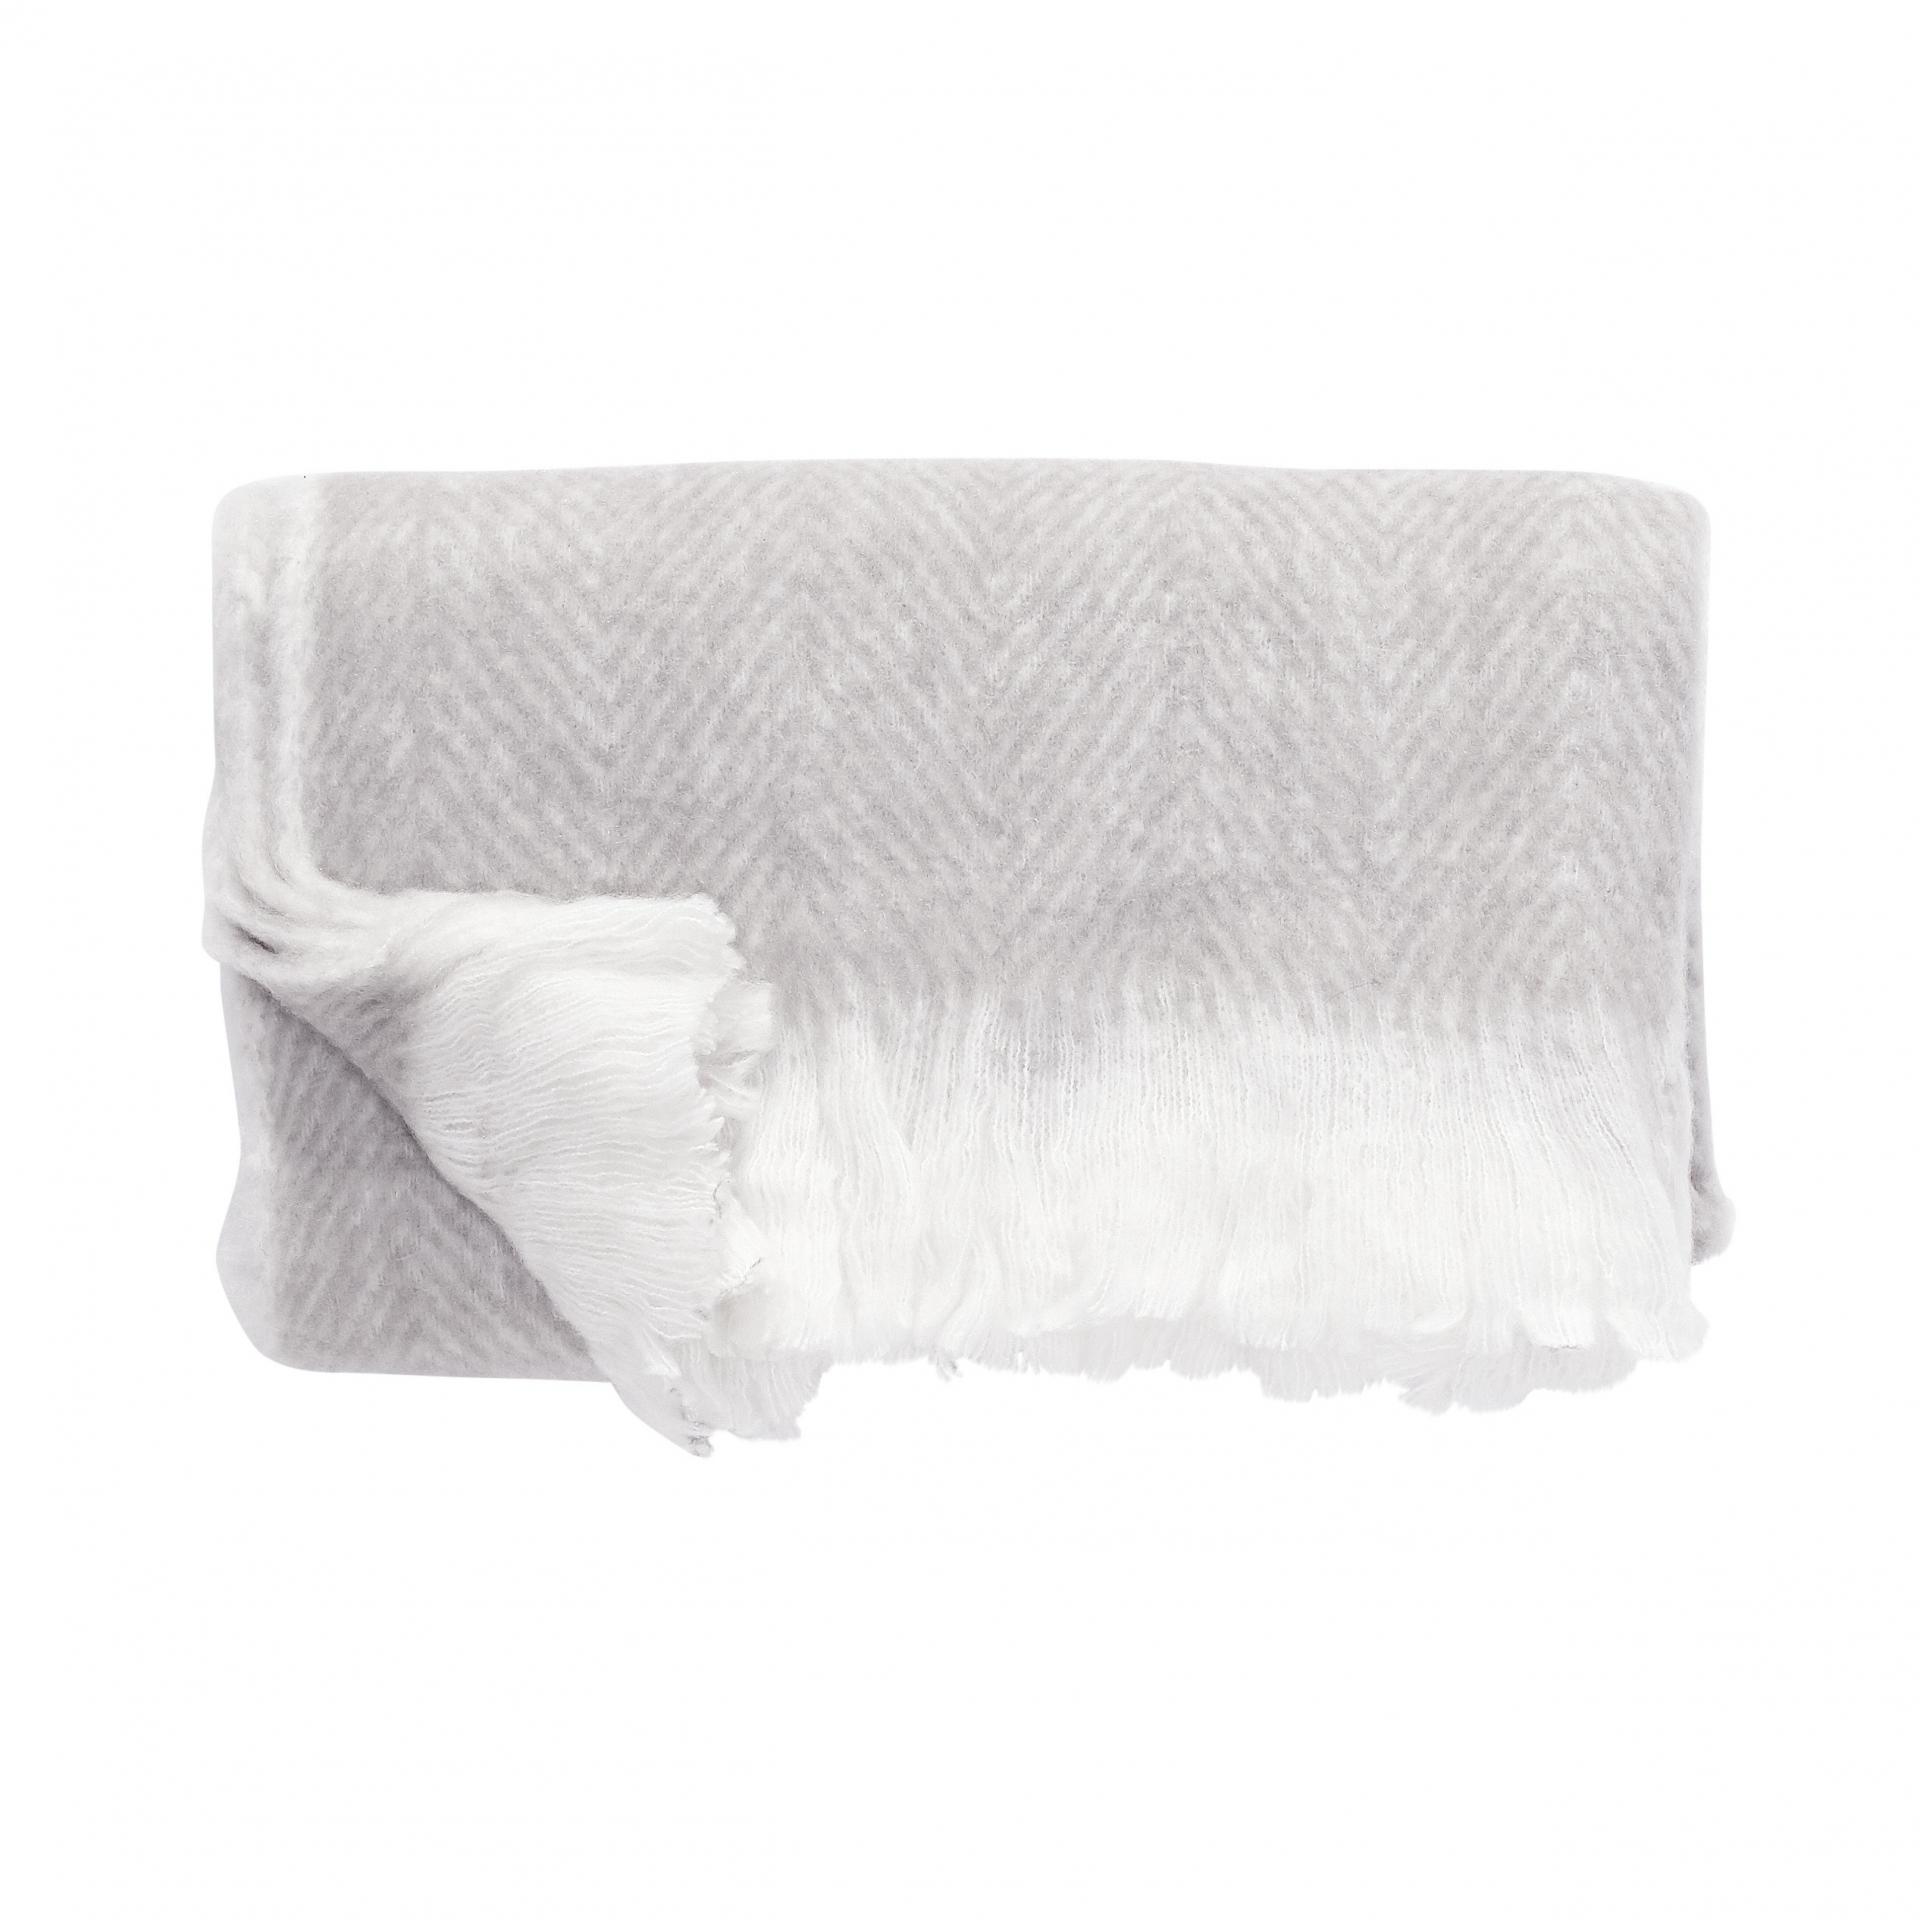 Šedo-bílá chlupatá deka s třásněmi 130x200 cm | Bella Rose